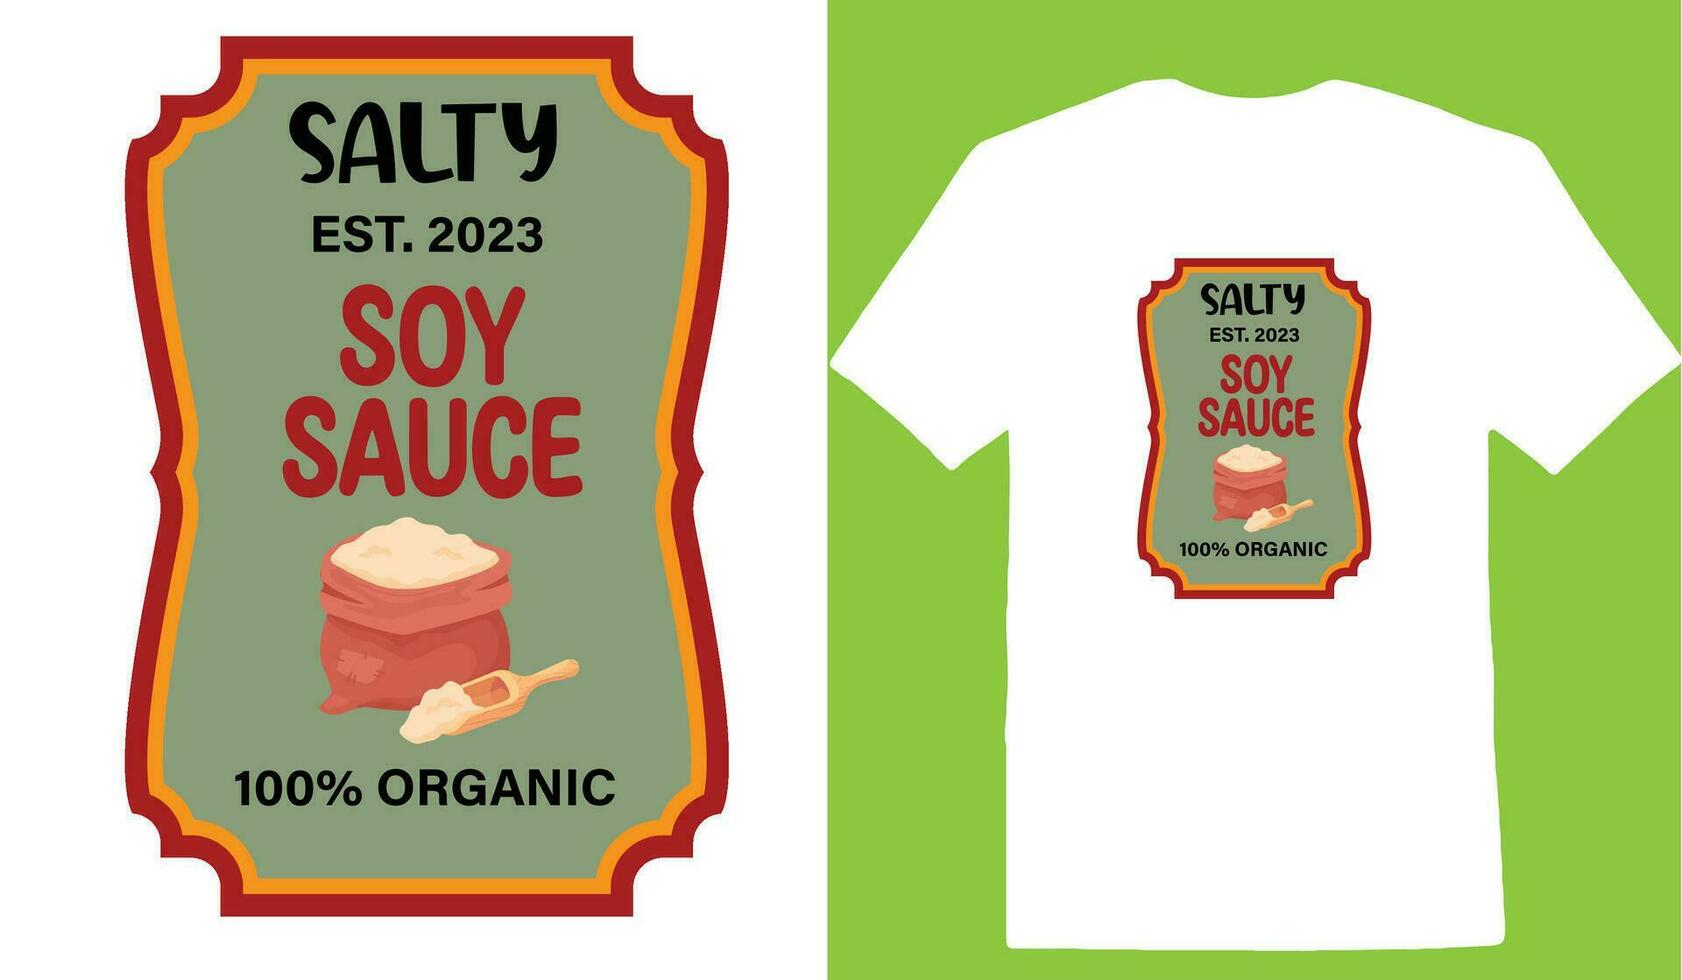 Salty Est. 2023 Soy Sauce 100 Organic T-shirt vector